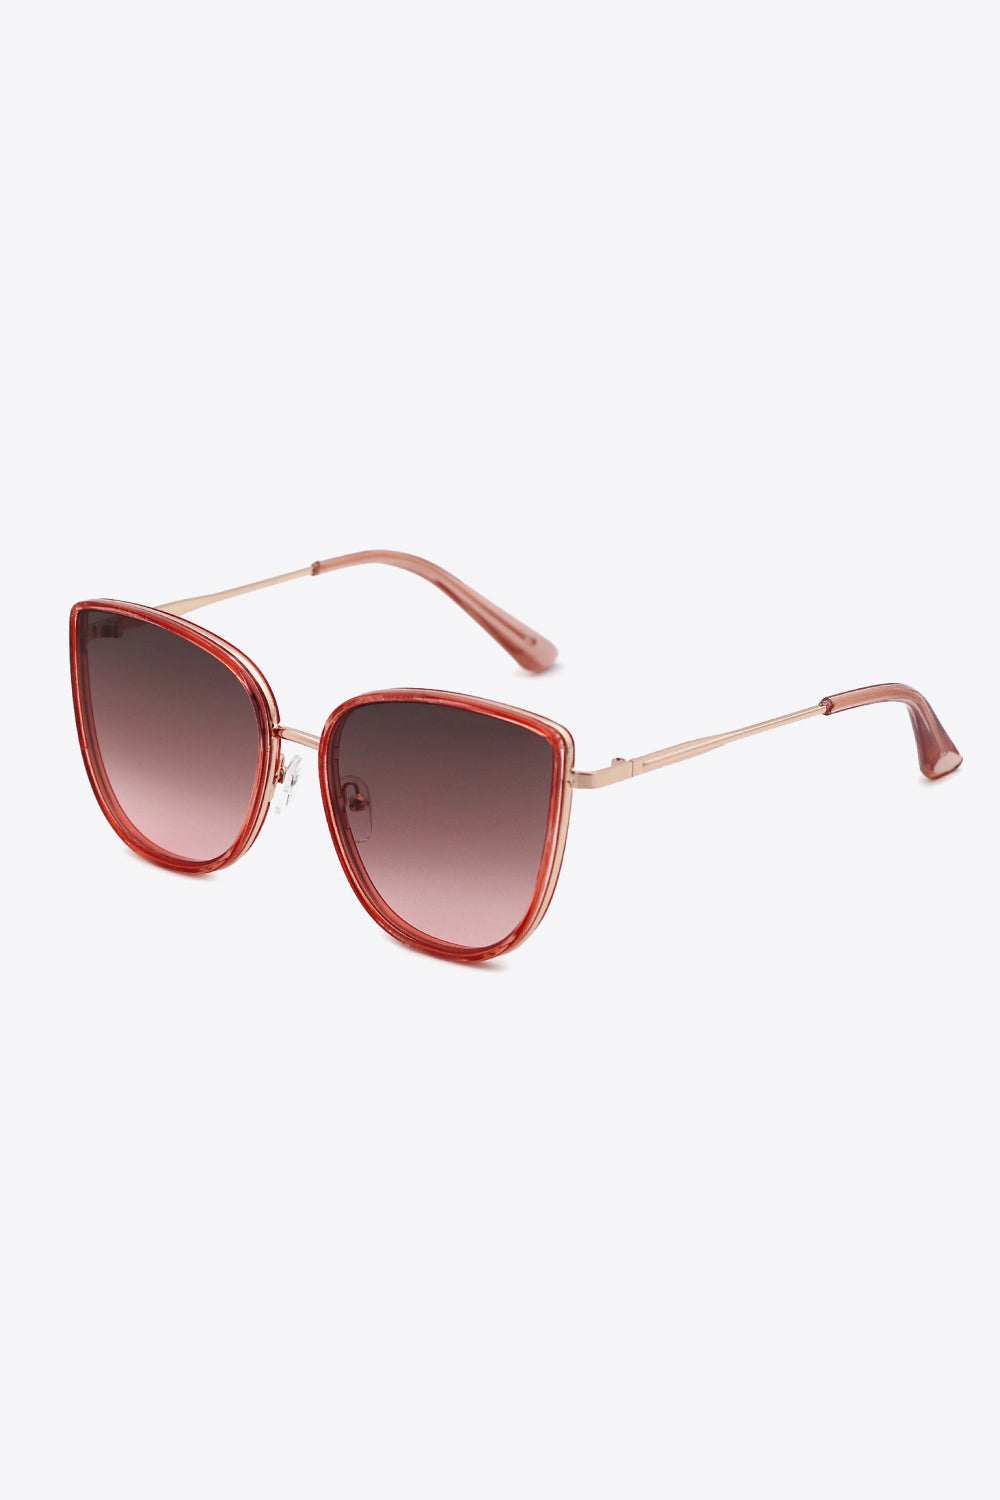 GYPSY-Full Rim Metal-Plastic Hybrid Frame Sunglasses